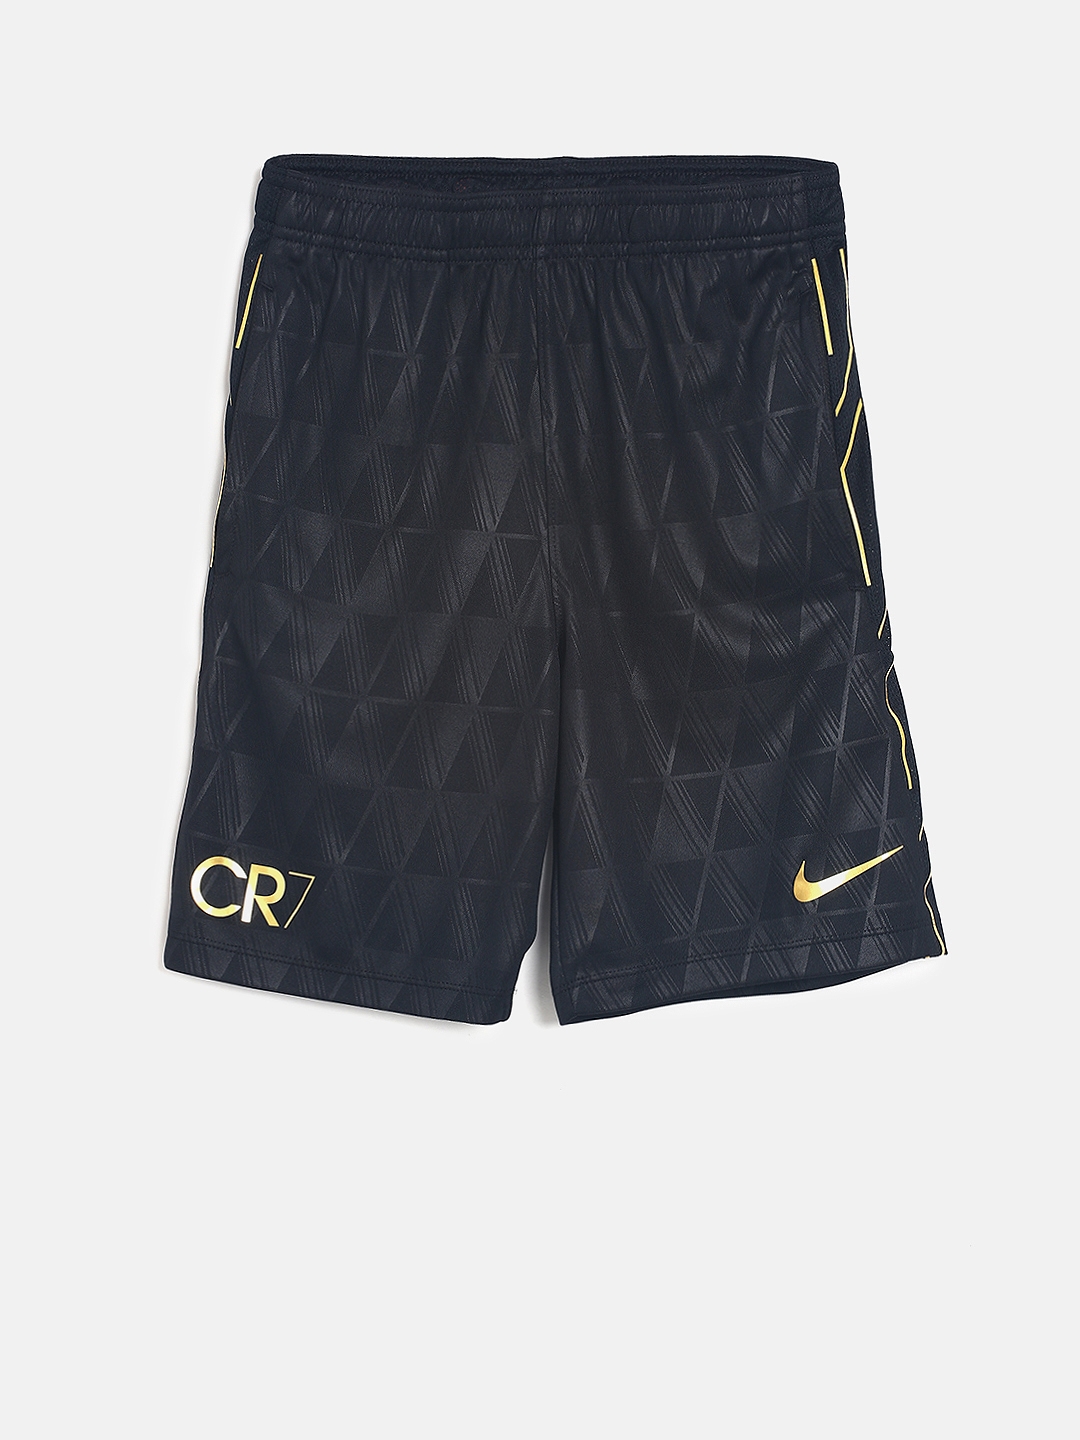 Buy Nike Boys Black & Gold Dry CR7 Academy Sports Shorts - Shorts ...